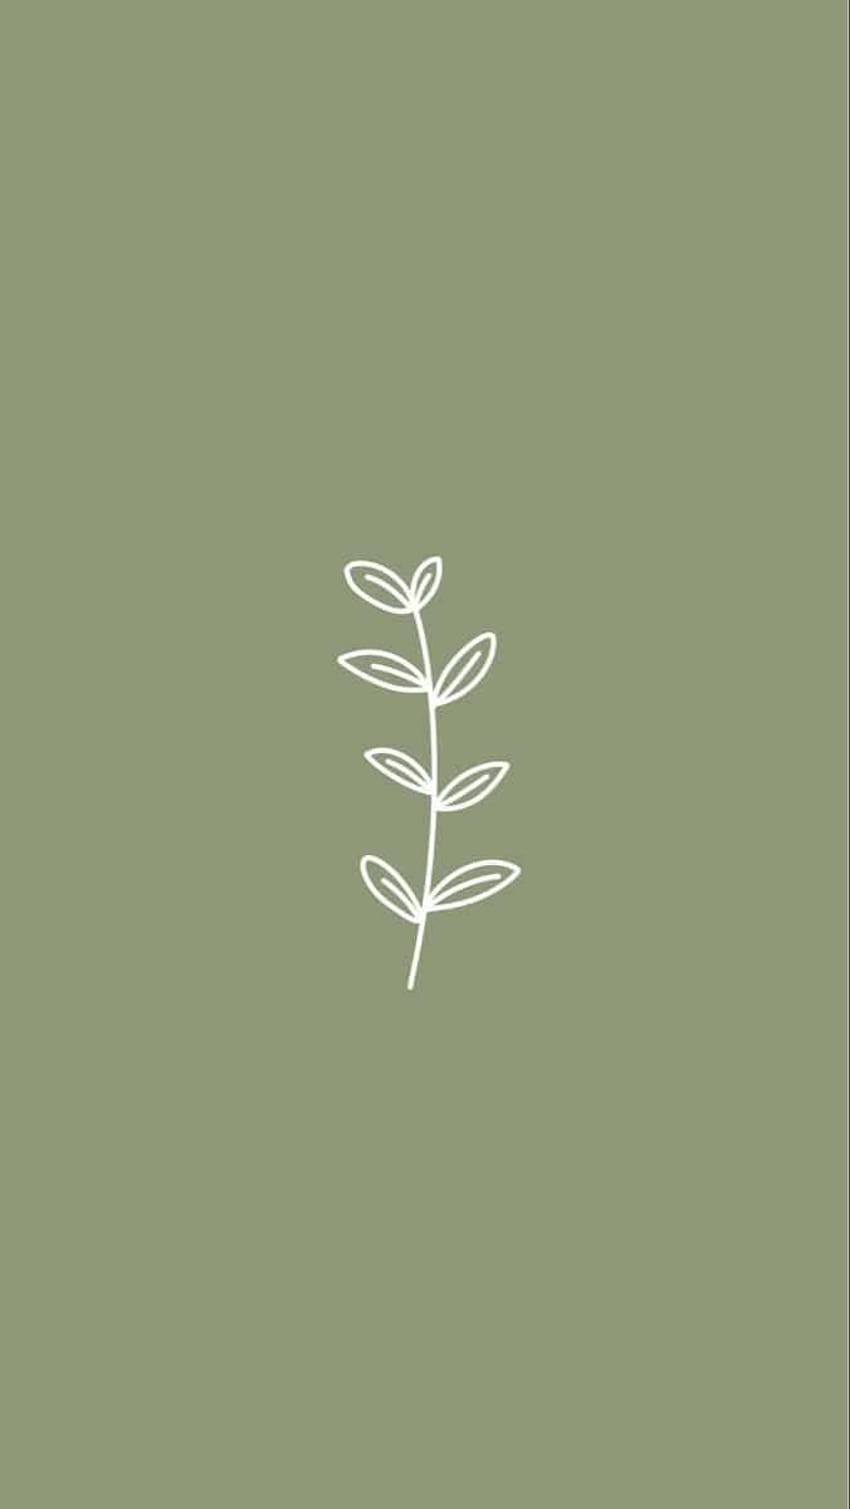 A minimalist logo for an herbal company - Sage green